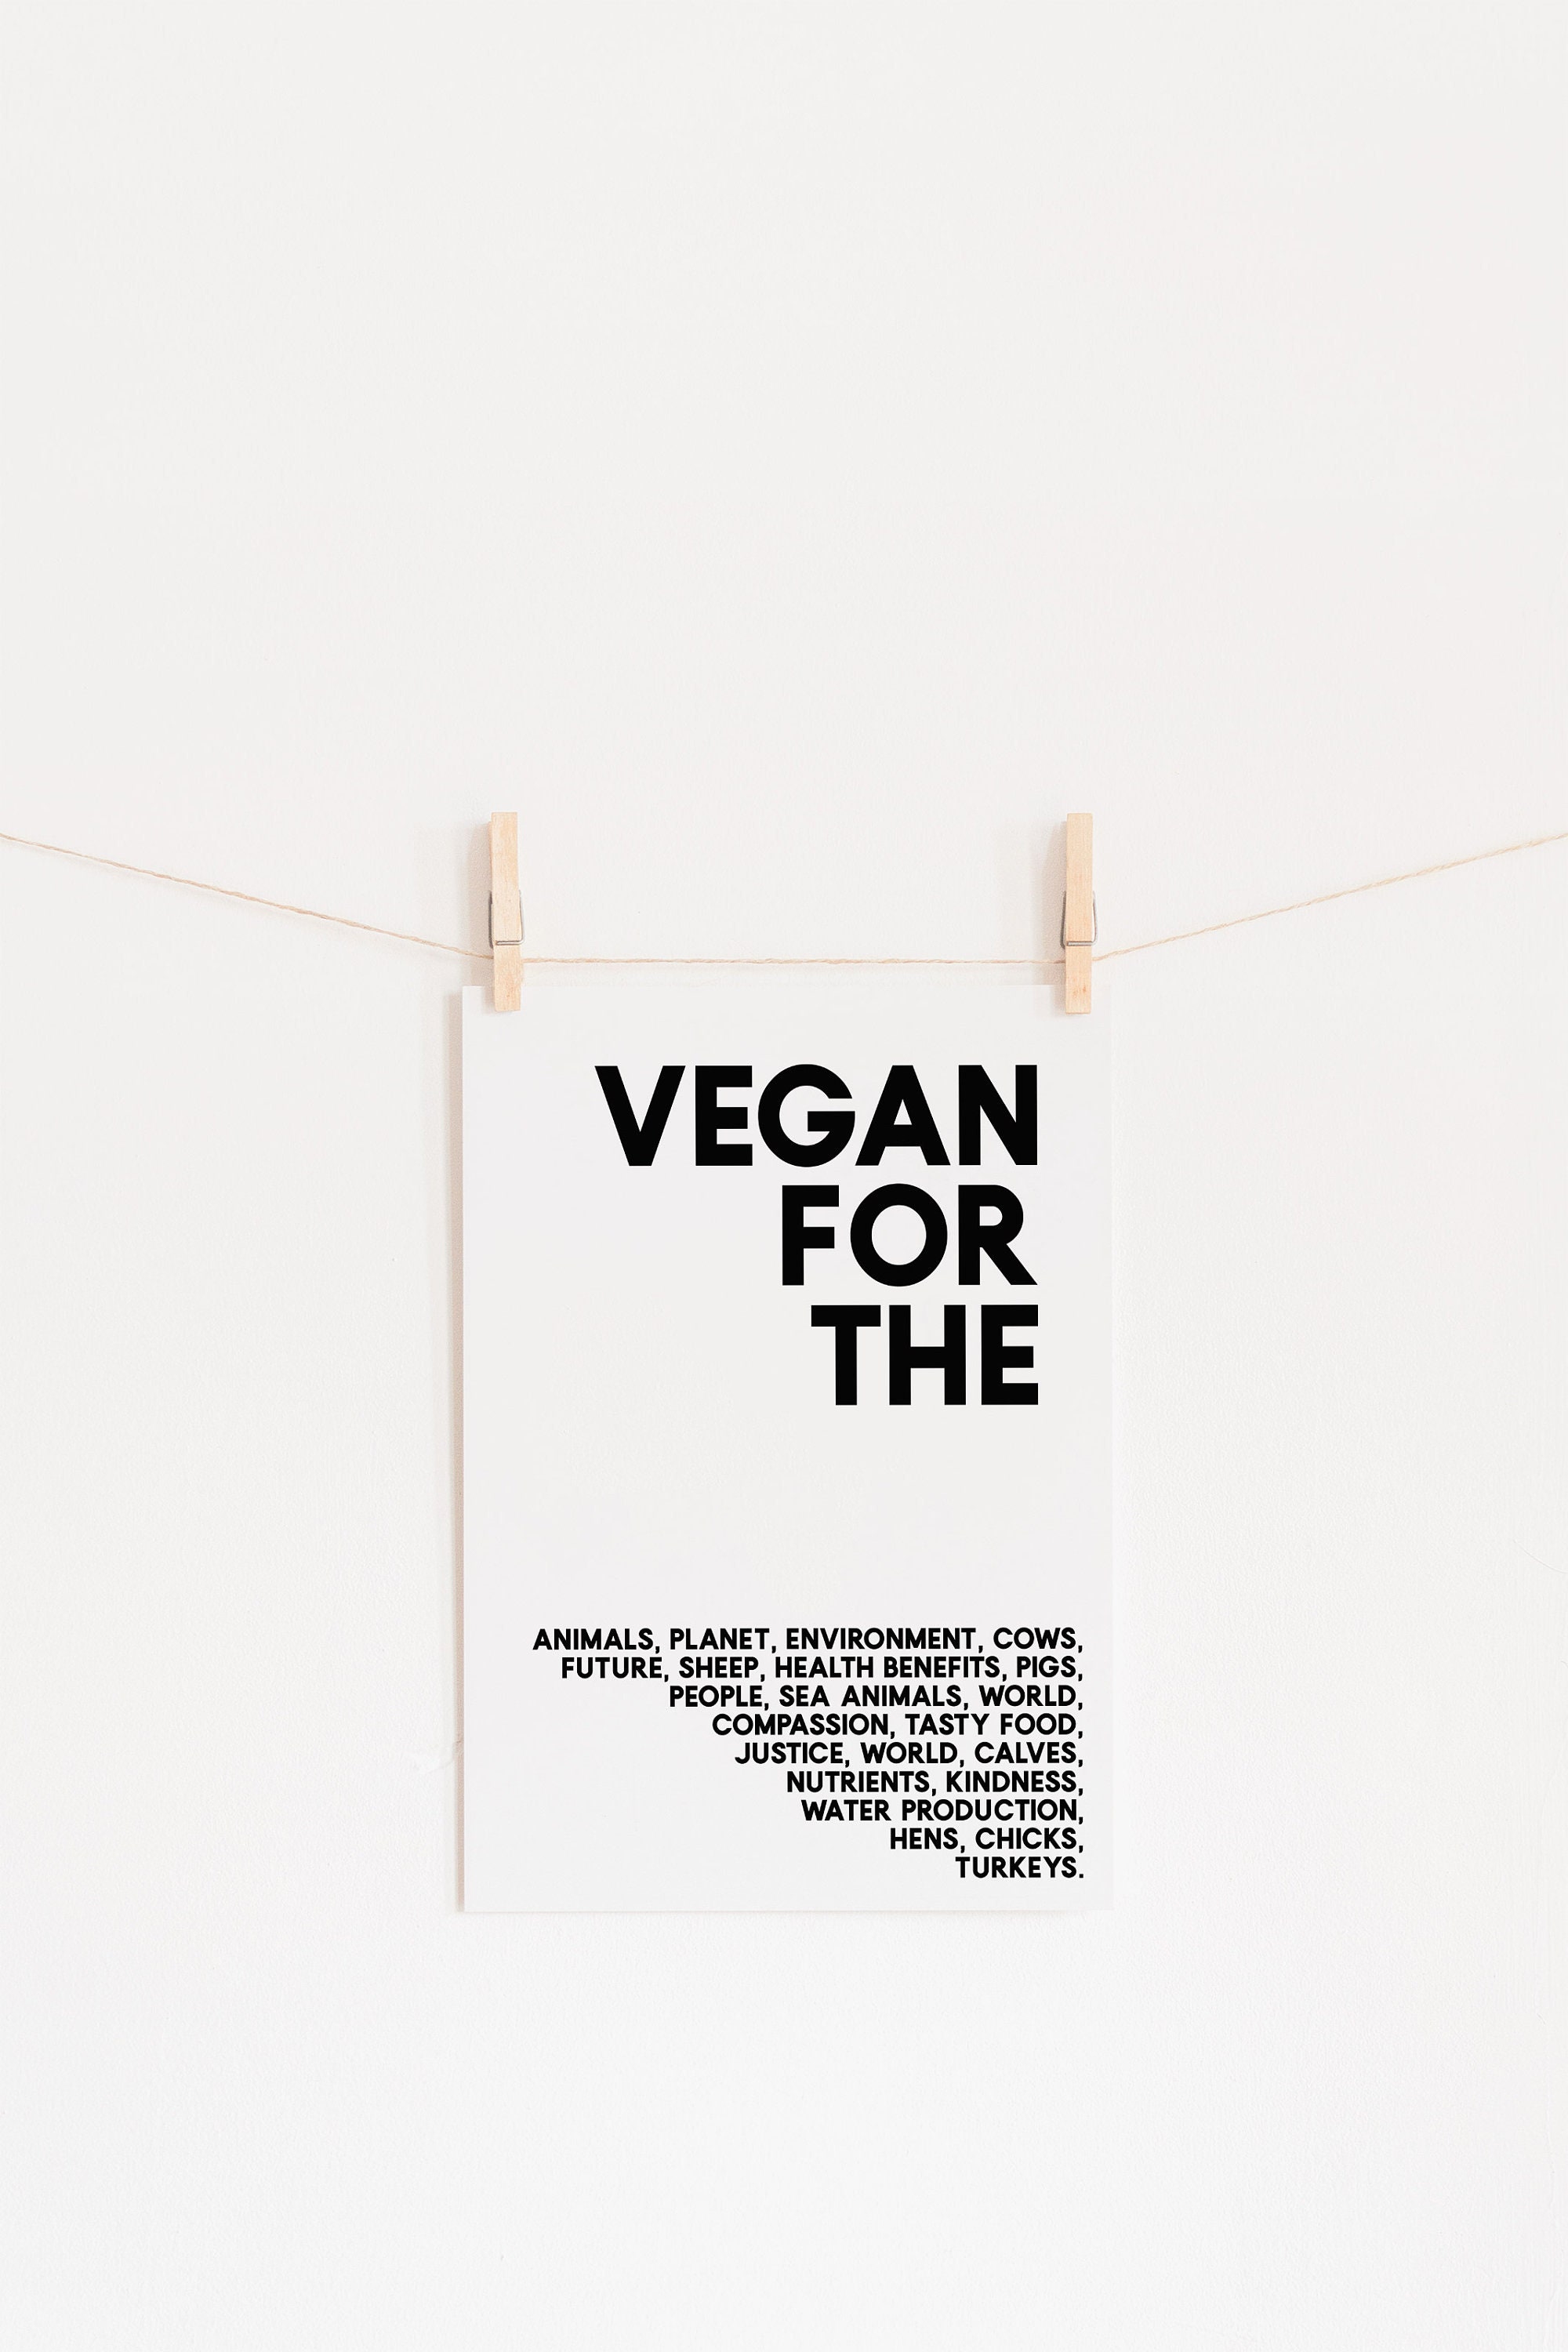 The Vegan’s Philosophy 